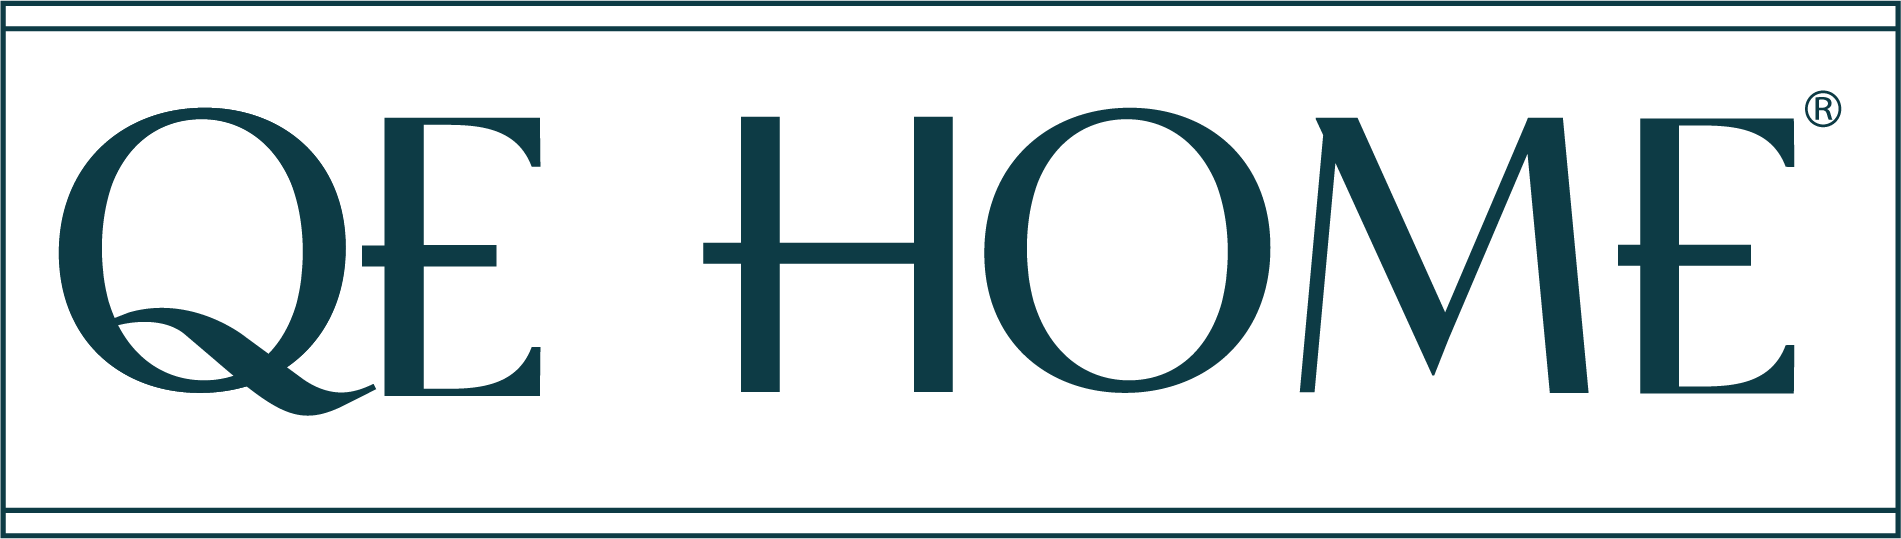 Quilts Etc. logo